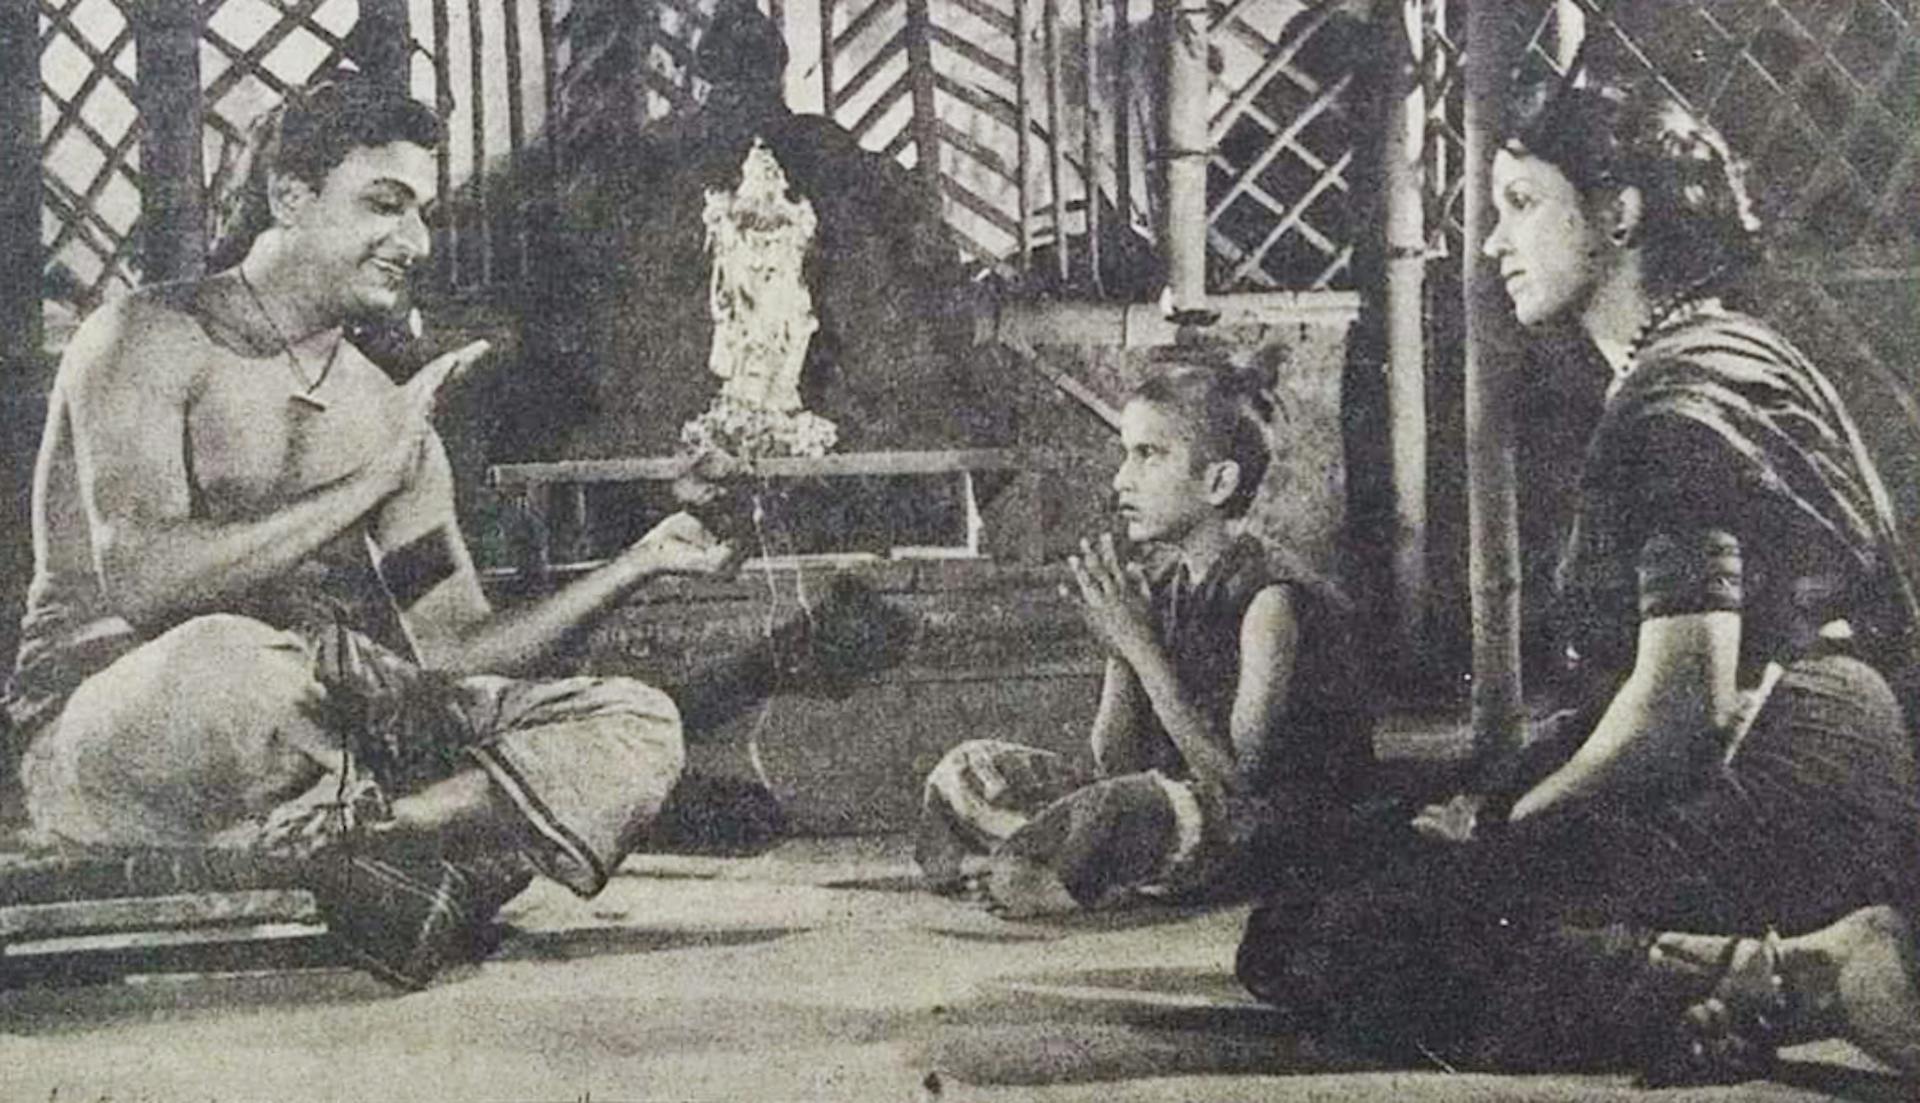 A still from the film Bhakta Cheta (1961) starring Dr. Rajkumar, Pratima Devi and S.V. Rajendra Singh (the child actor here). Photograph by MRK Murthy